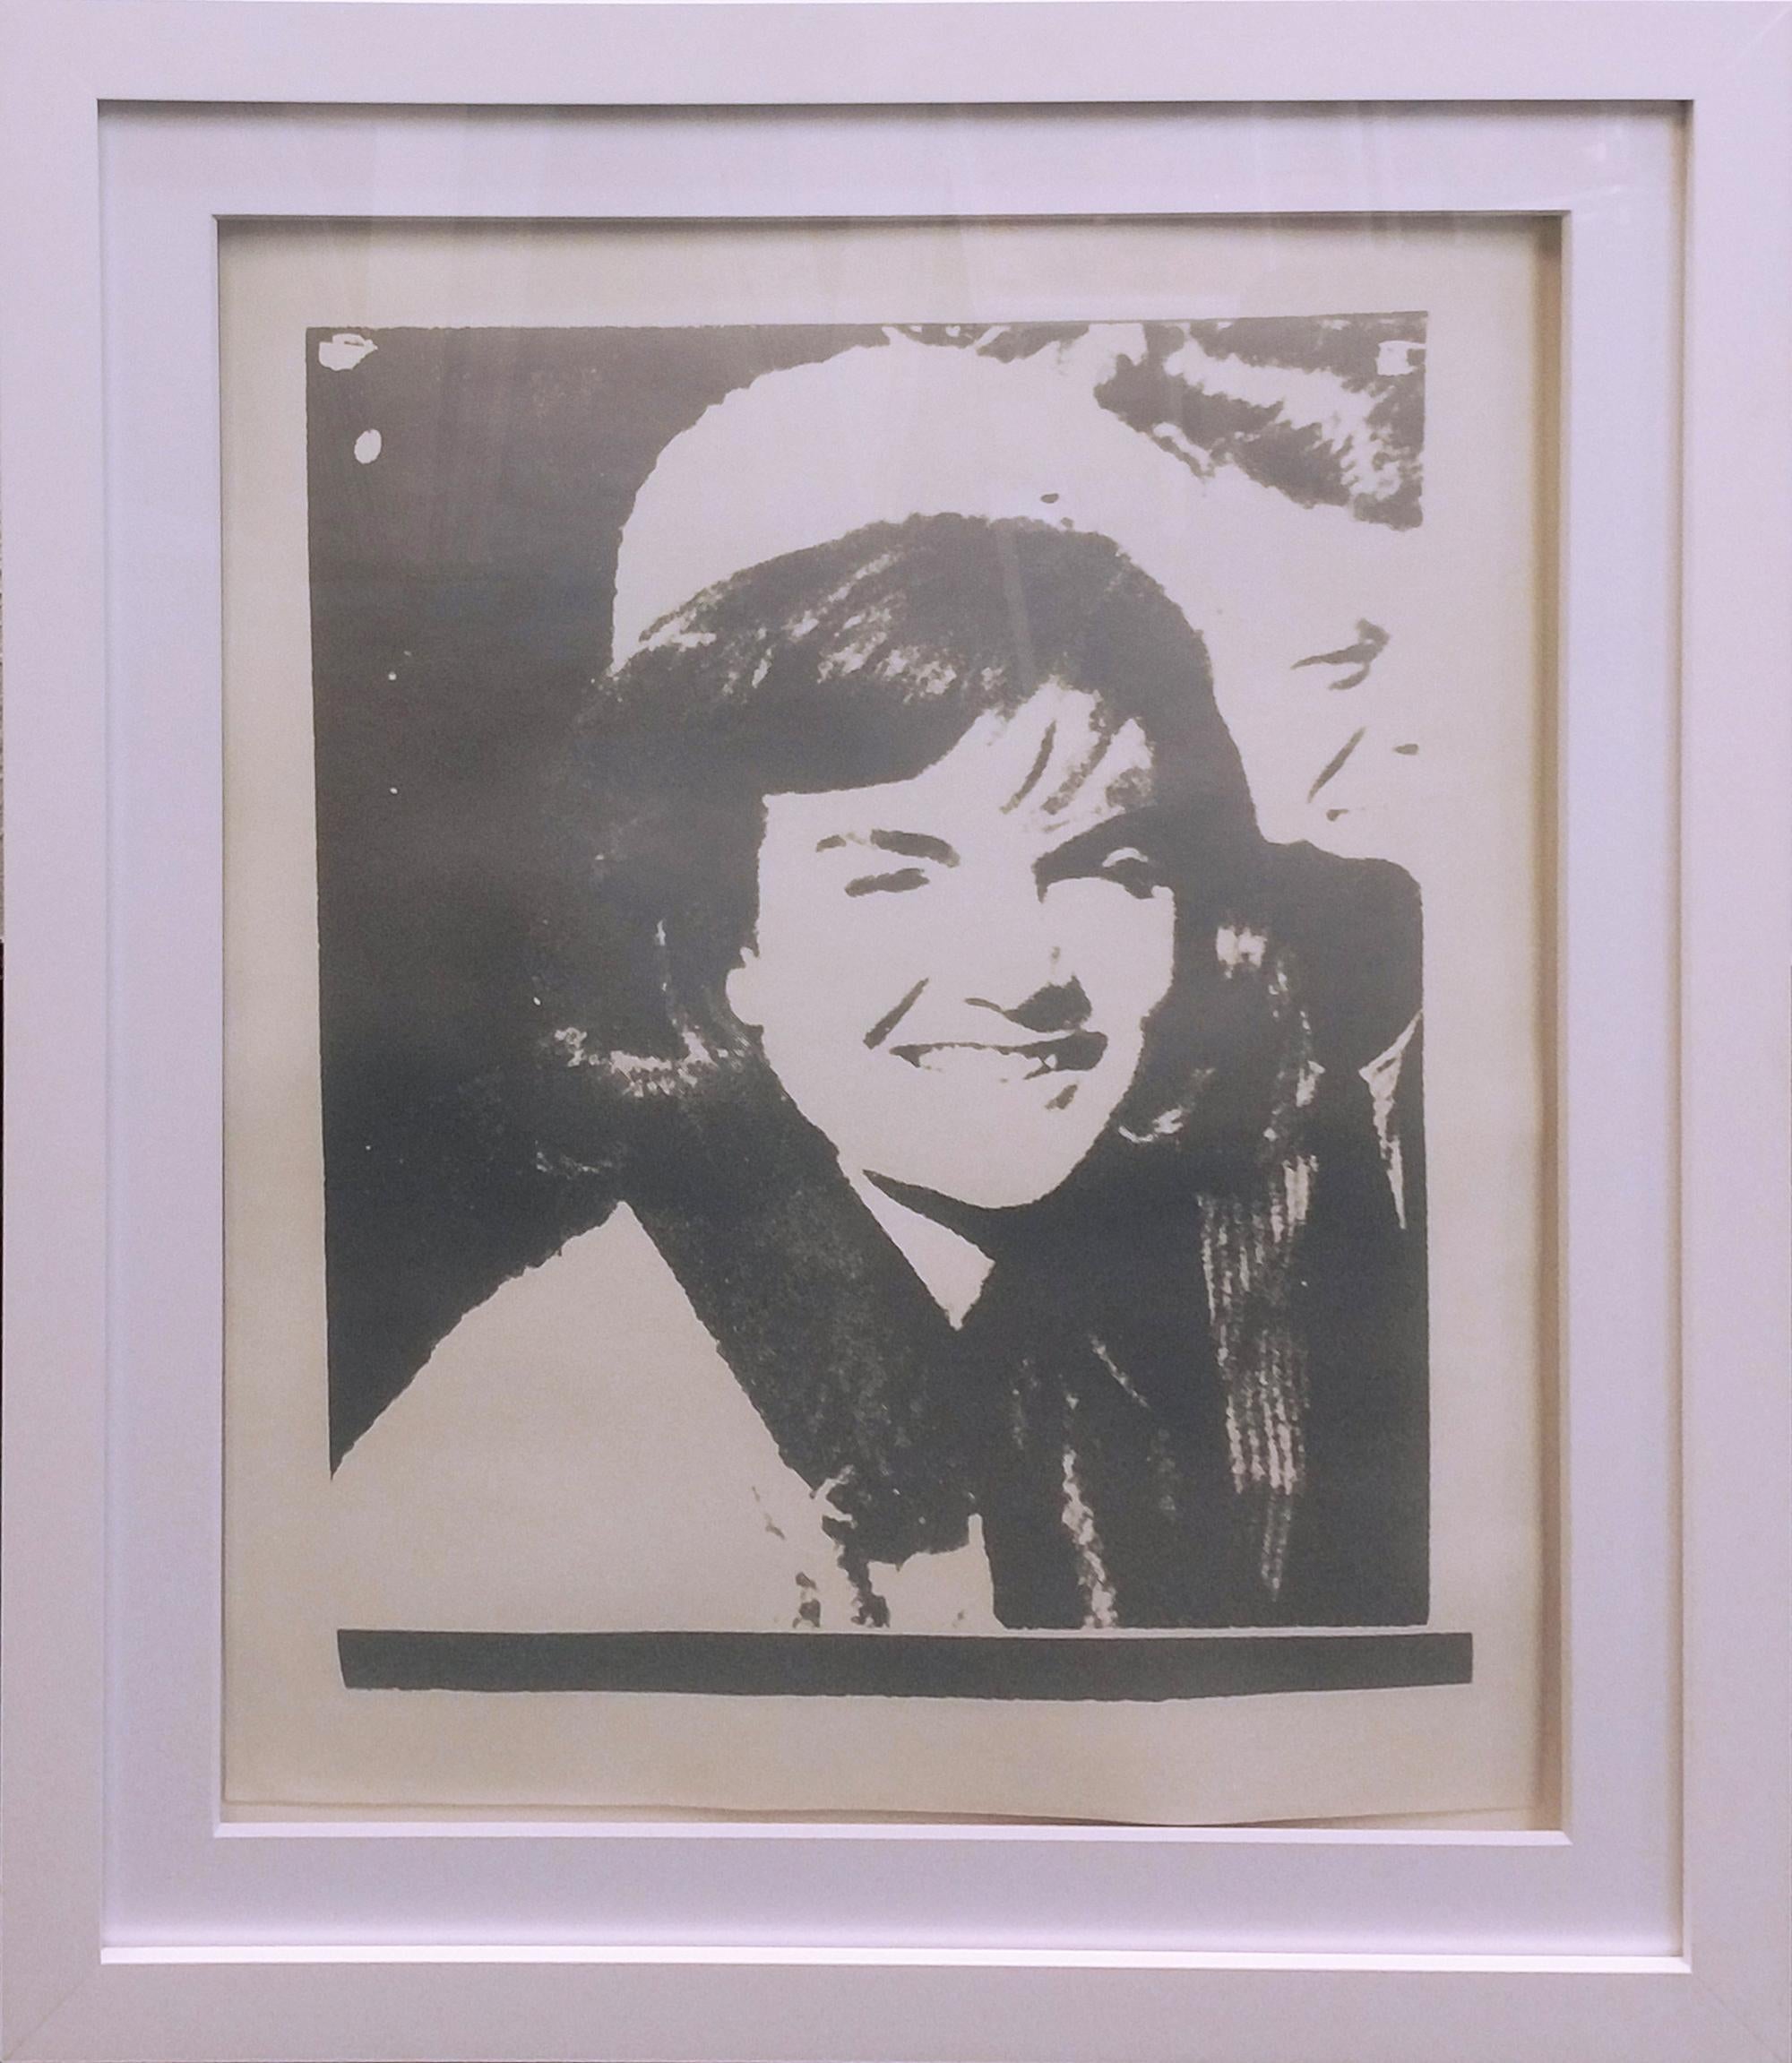 JACQUELINE KENNEDY I FS II.13 - Print by Andy Warhol